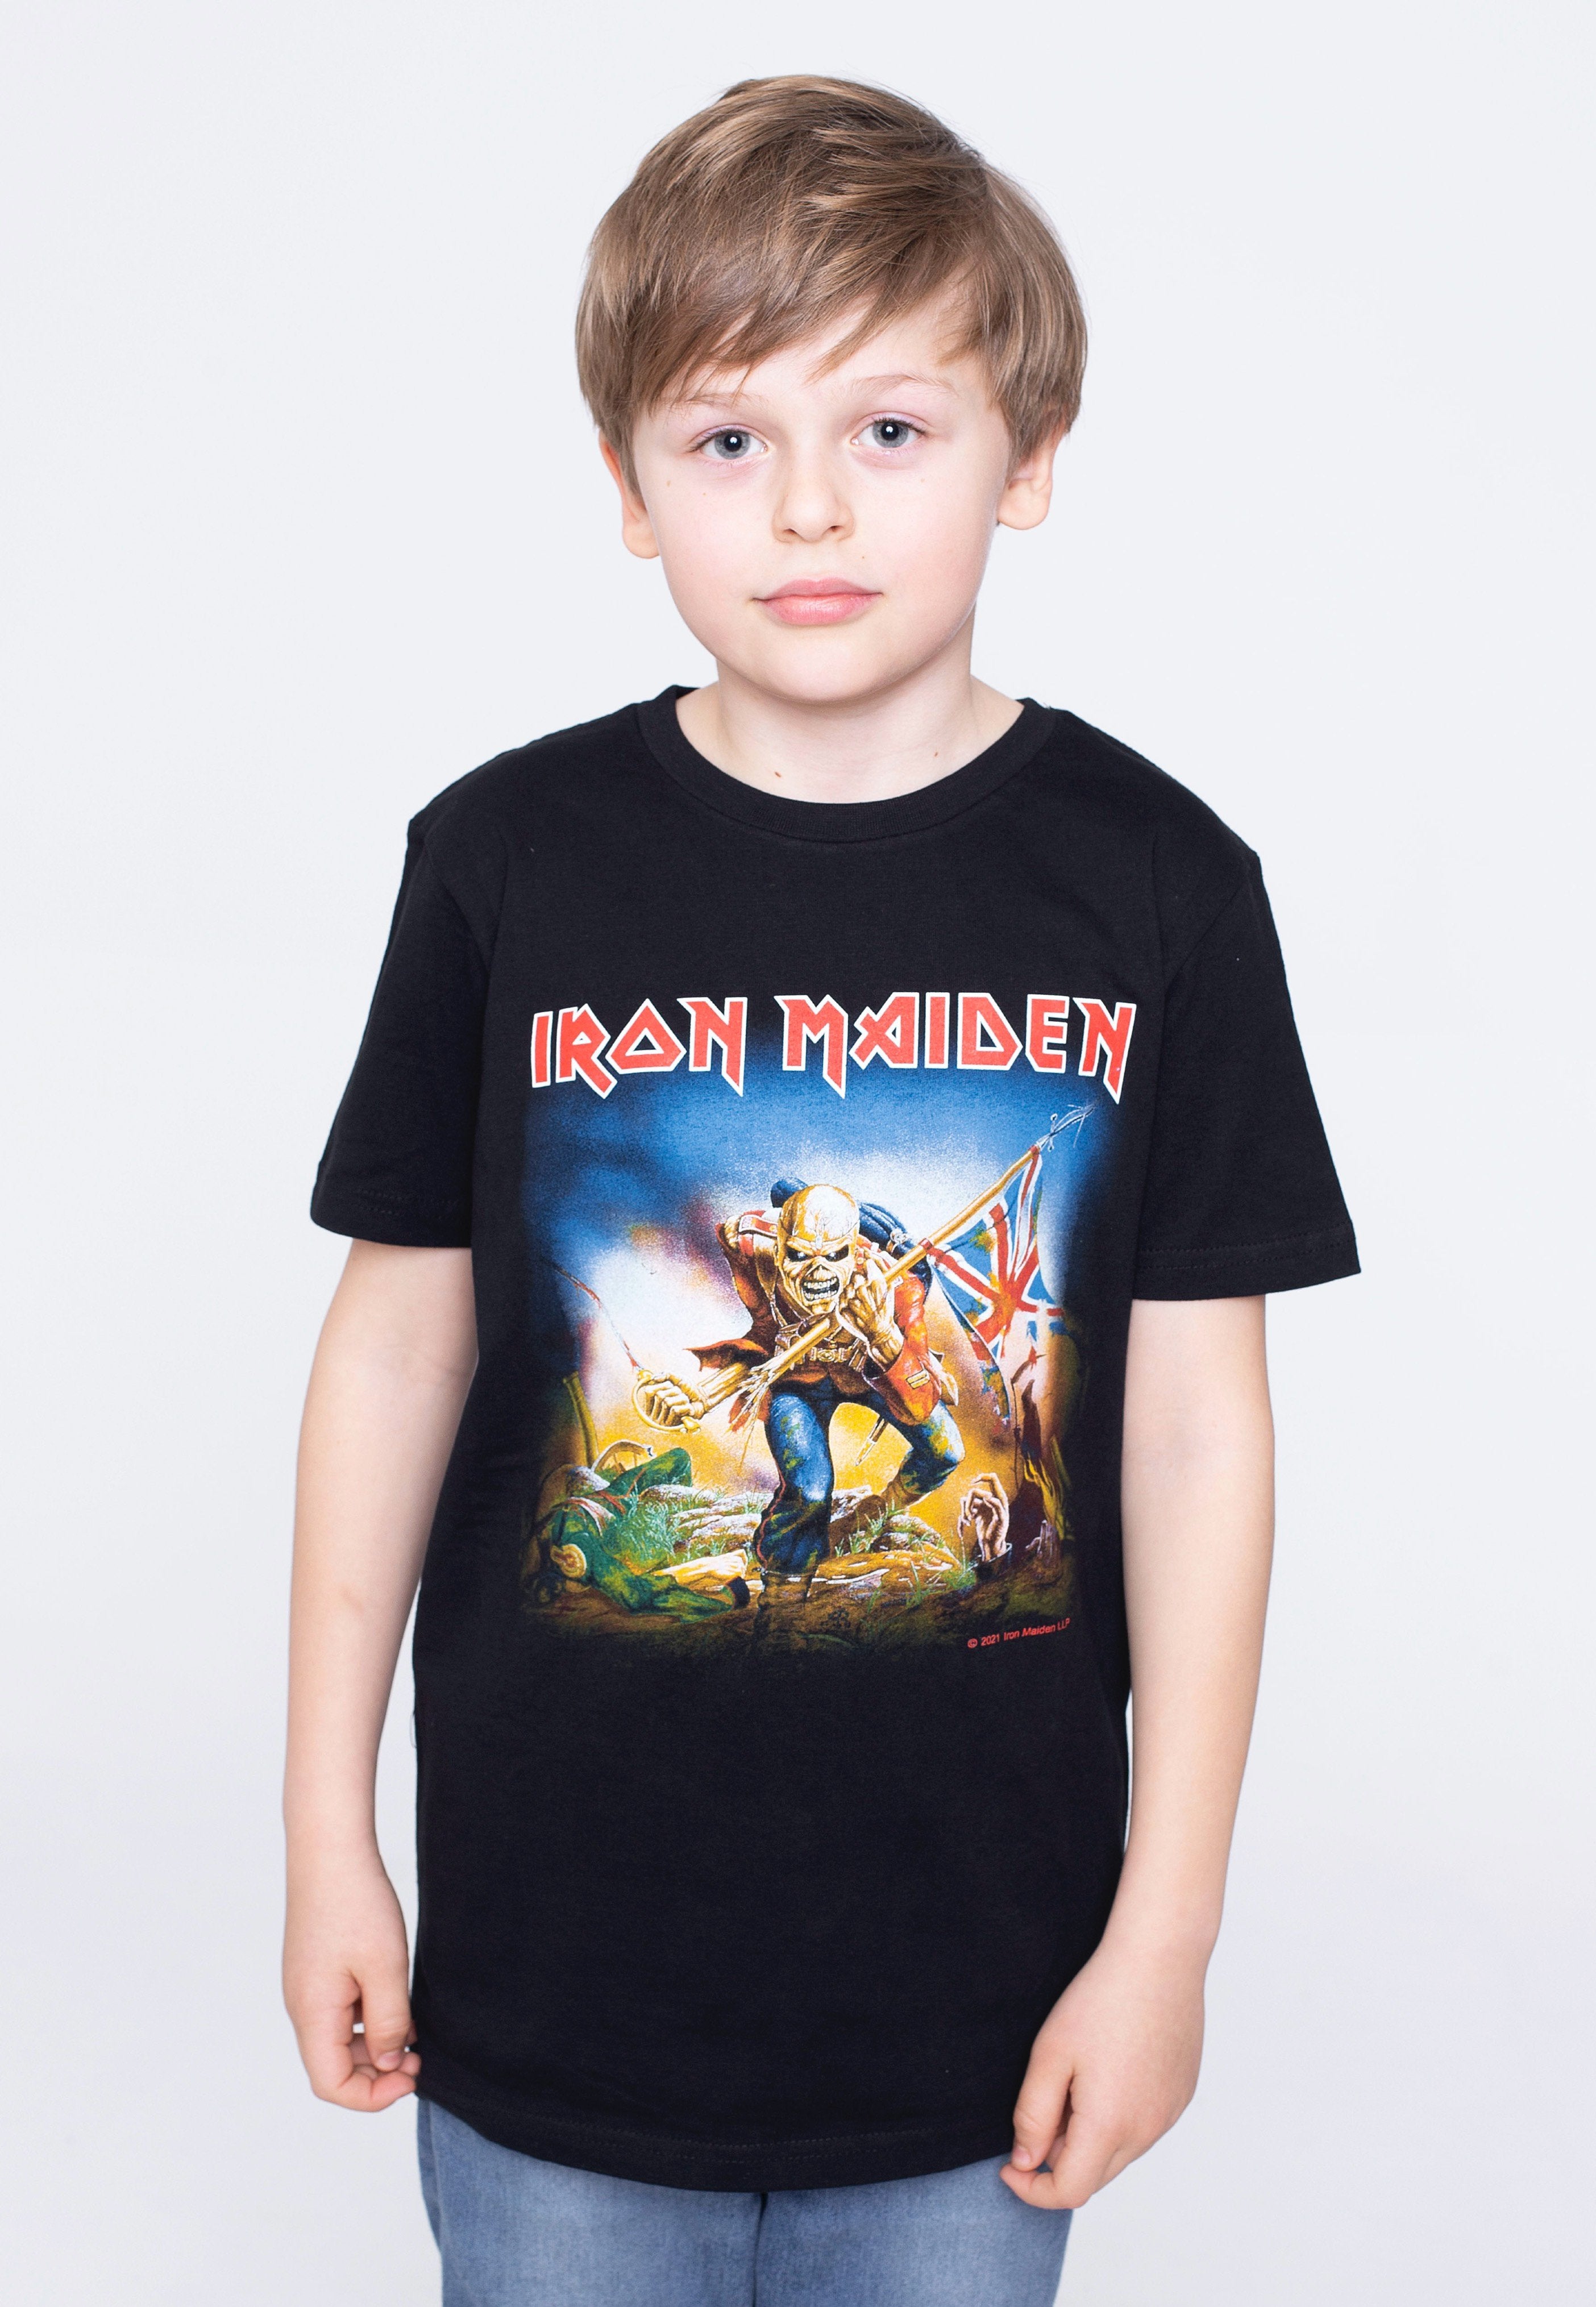 Iron Maiden - Trooper Kids Black/Multicolored - T-Shirt